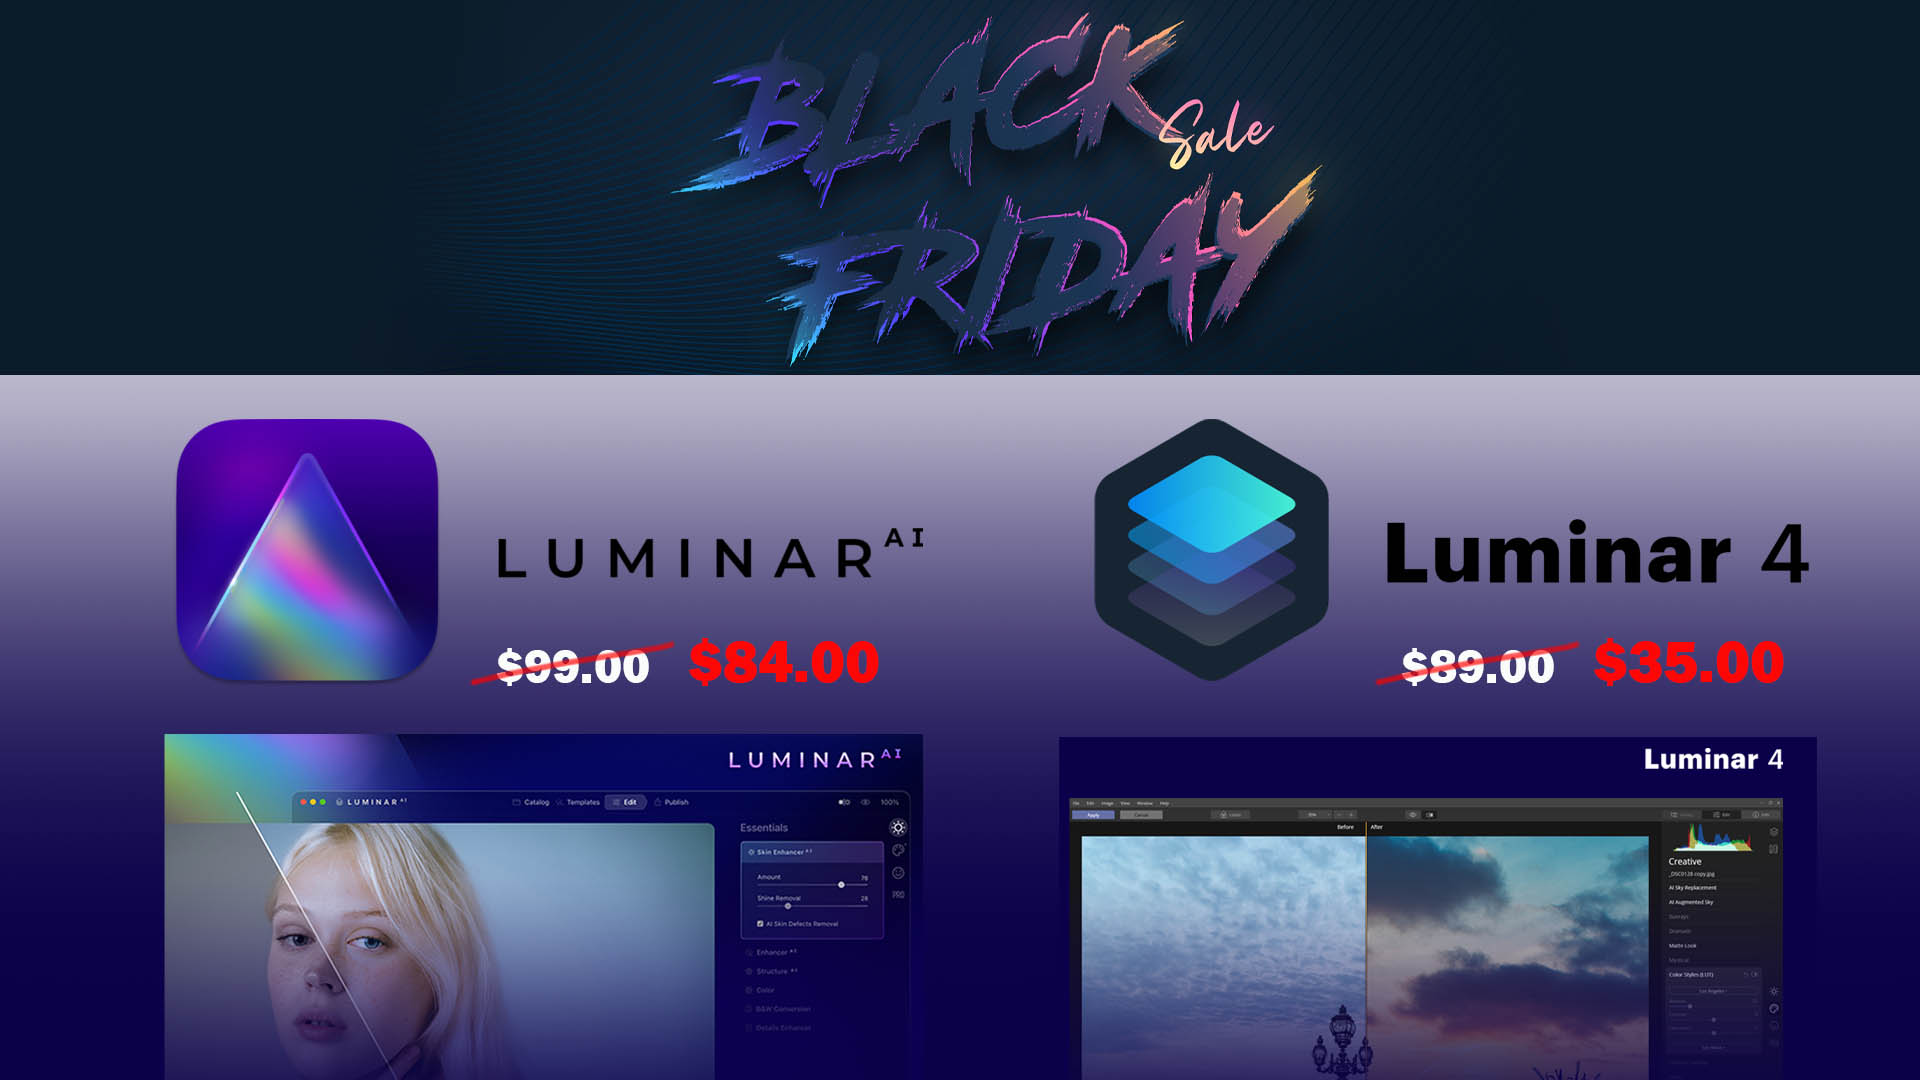 Luminar AI - Black Friday Sale! Big Discounts!